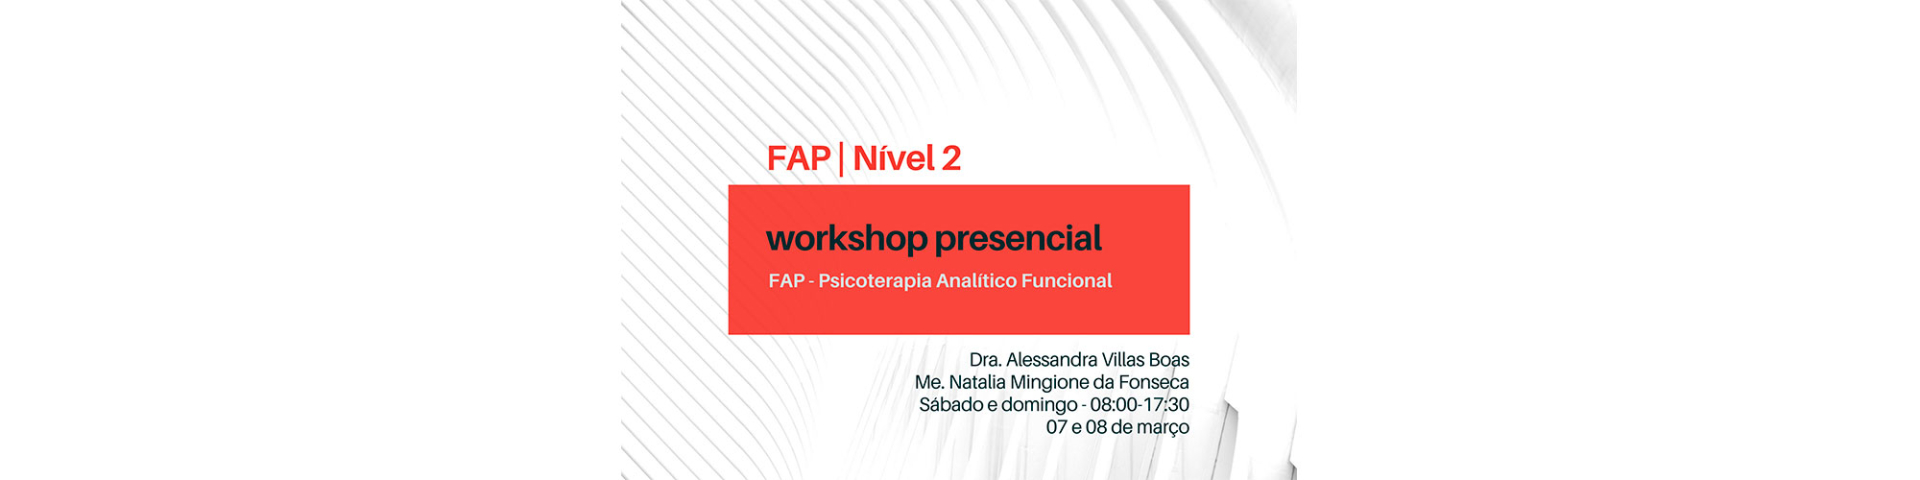 Workshop Nivel 2 FAP - Psicoterapia Analítico Funcional